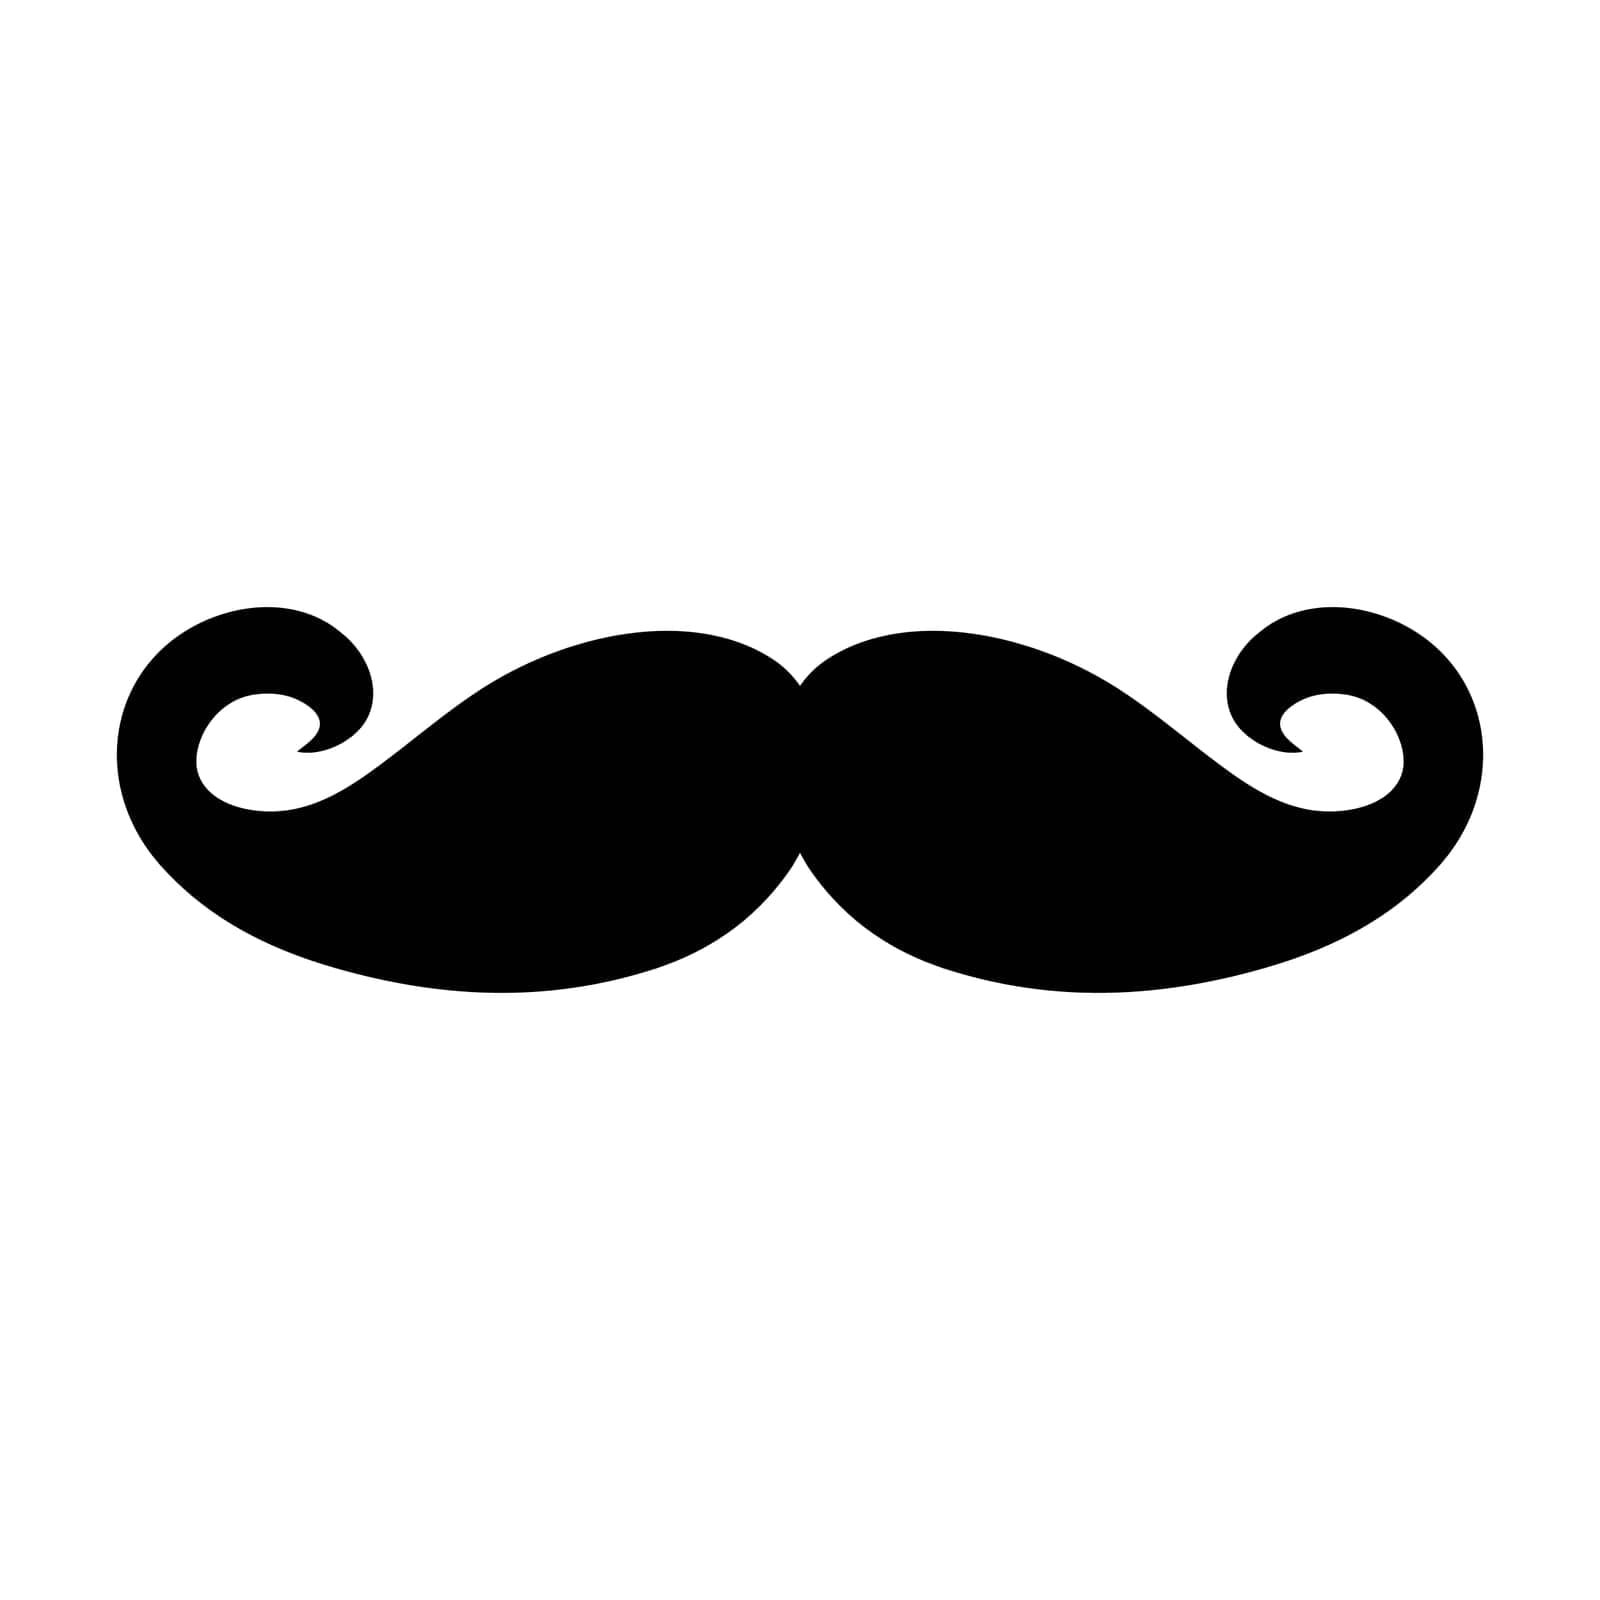 Moustache icon. Moustache silhouette. Isolated moustache symbol by Chekman